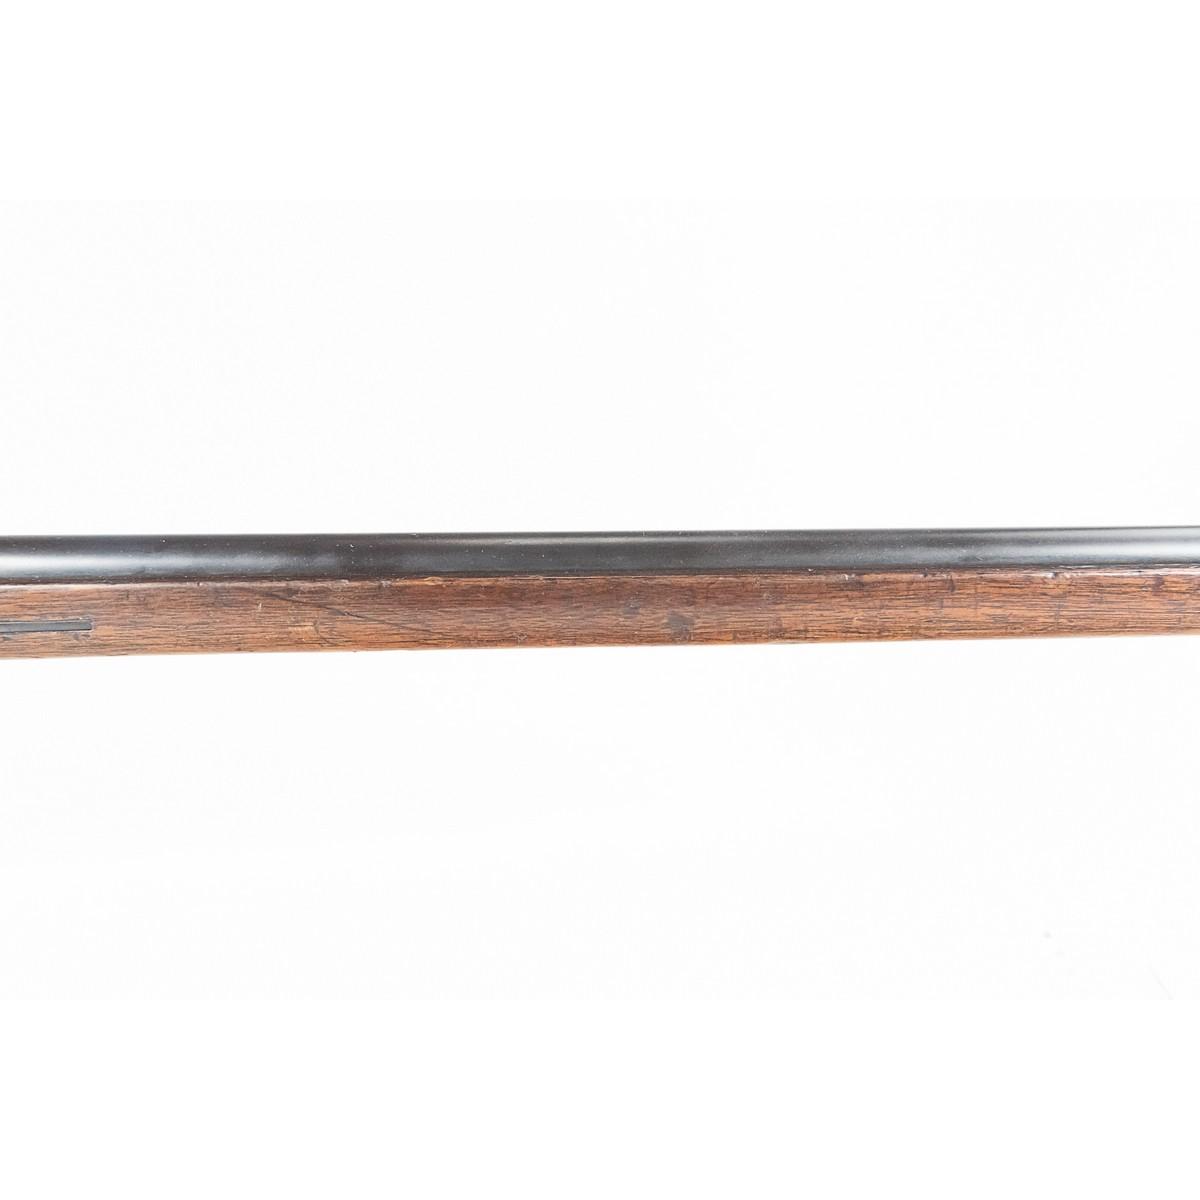 US Springfield Model 1873 Rifle .45-70 (A)